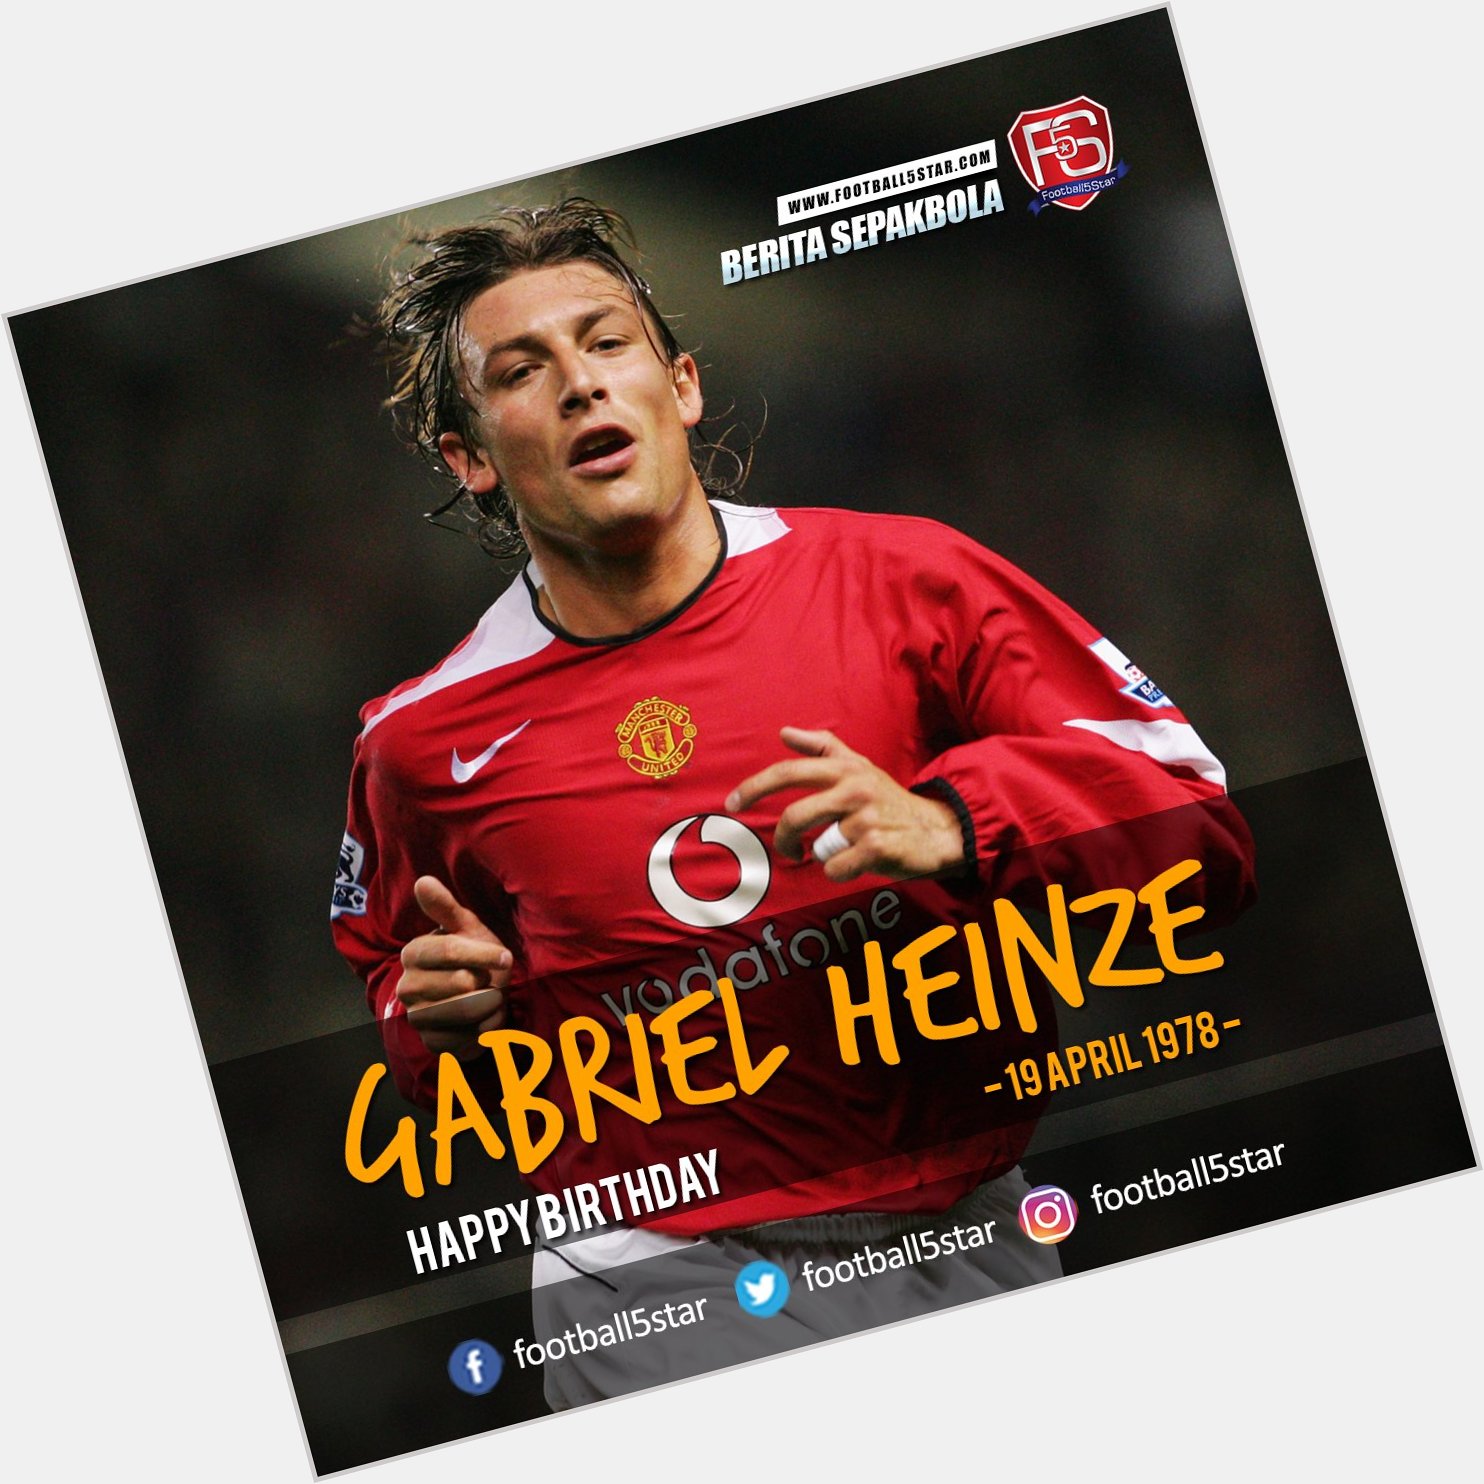 Kalian masih ingat Gabriel Heinze guys? hari ini dia berulang tahun, 
Happy Birthday Gabriel Heinze 19 April 1978 